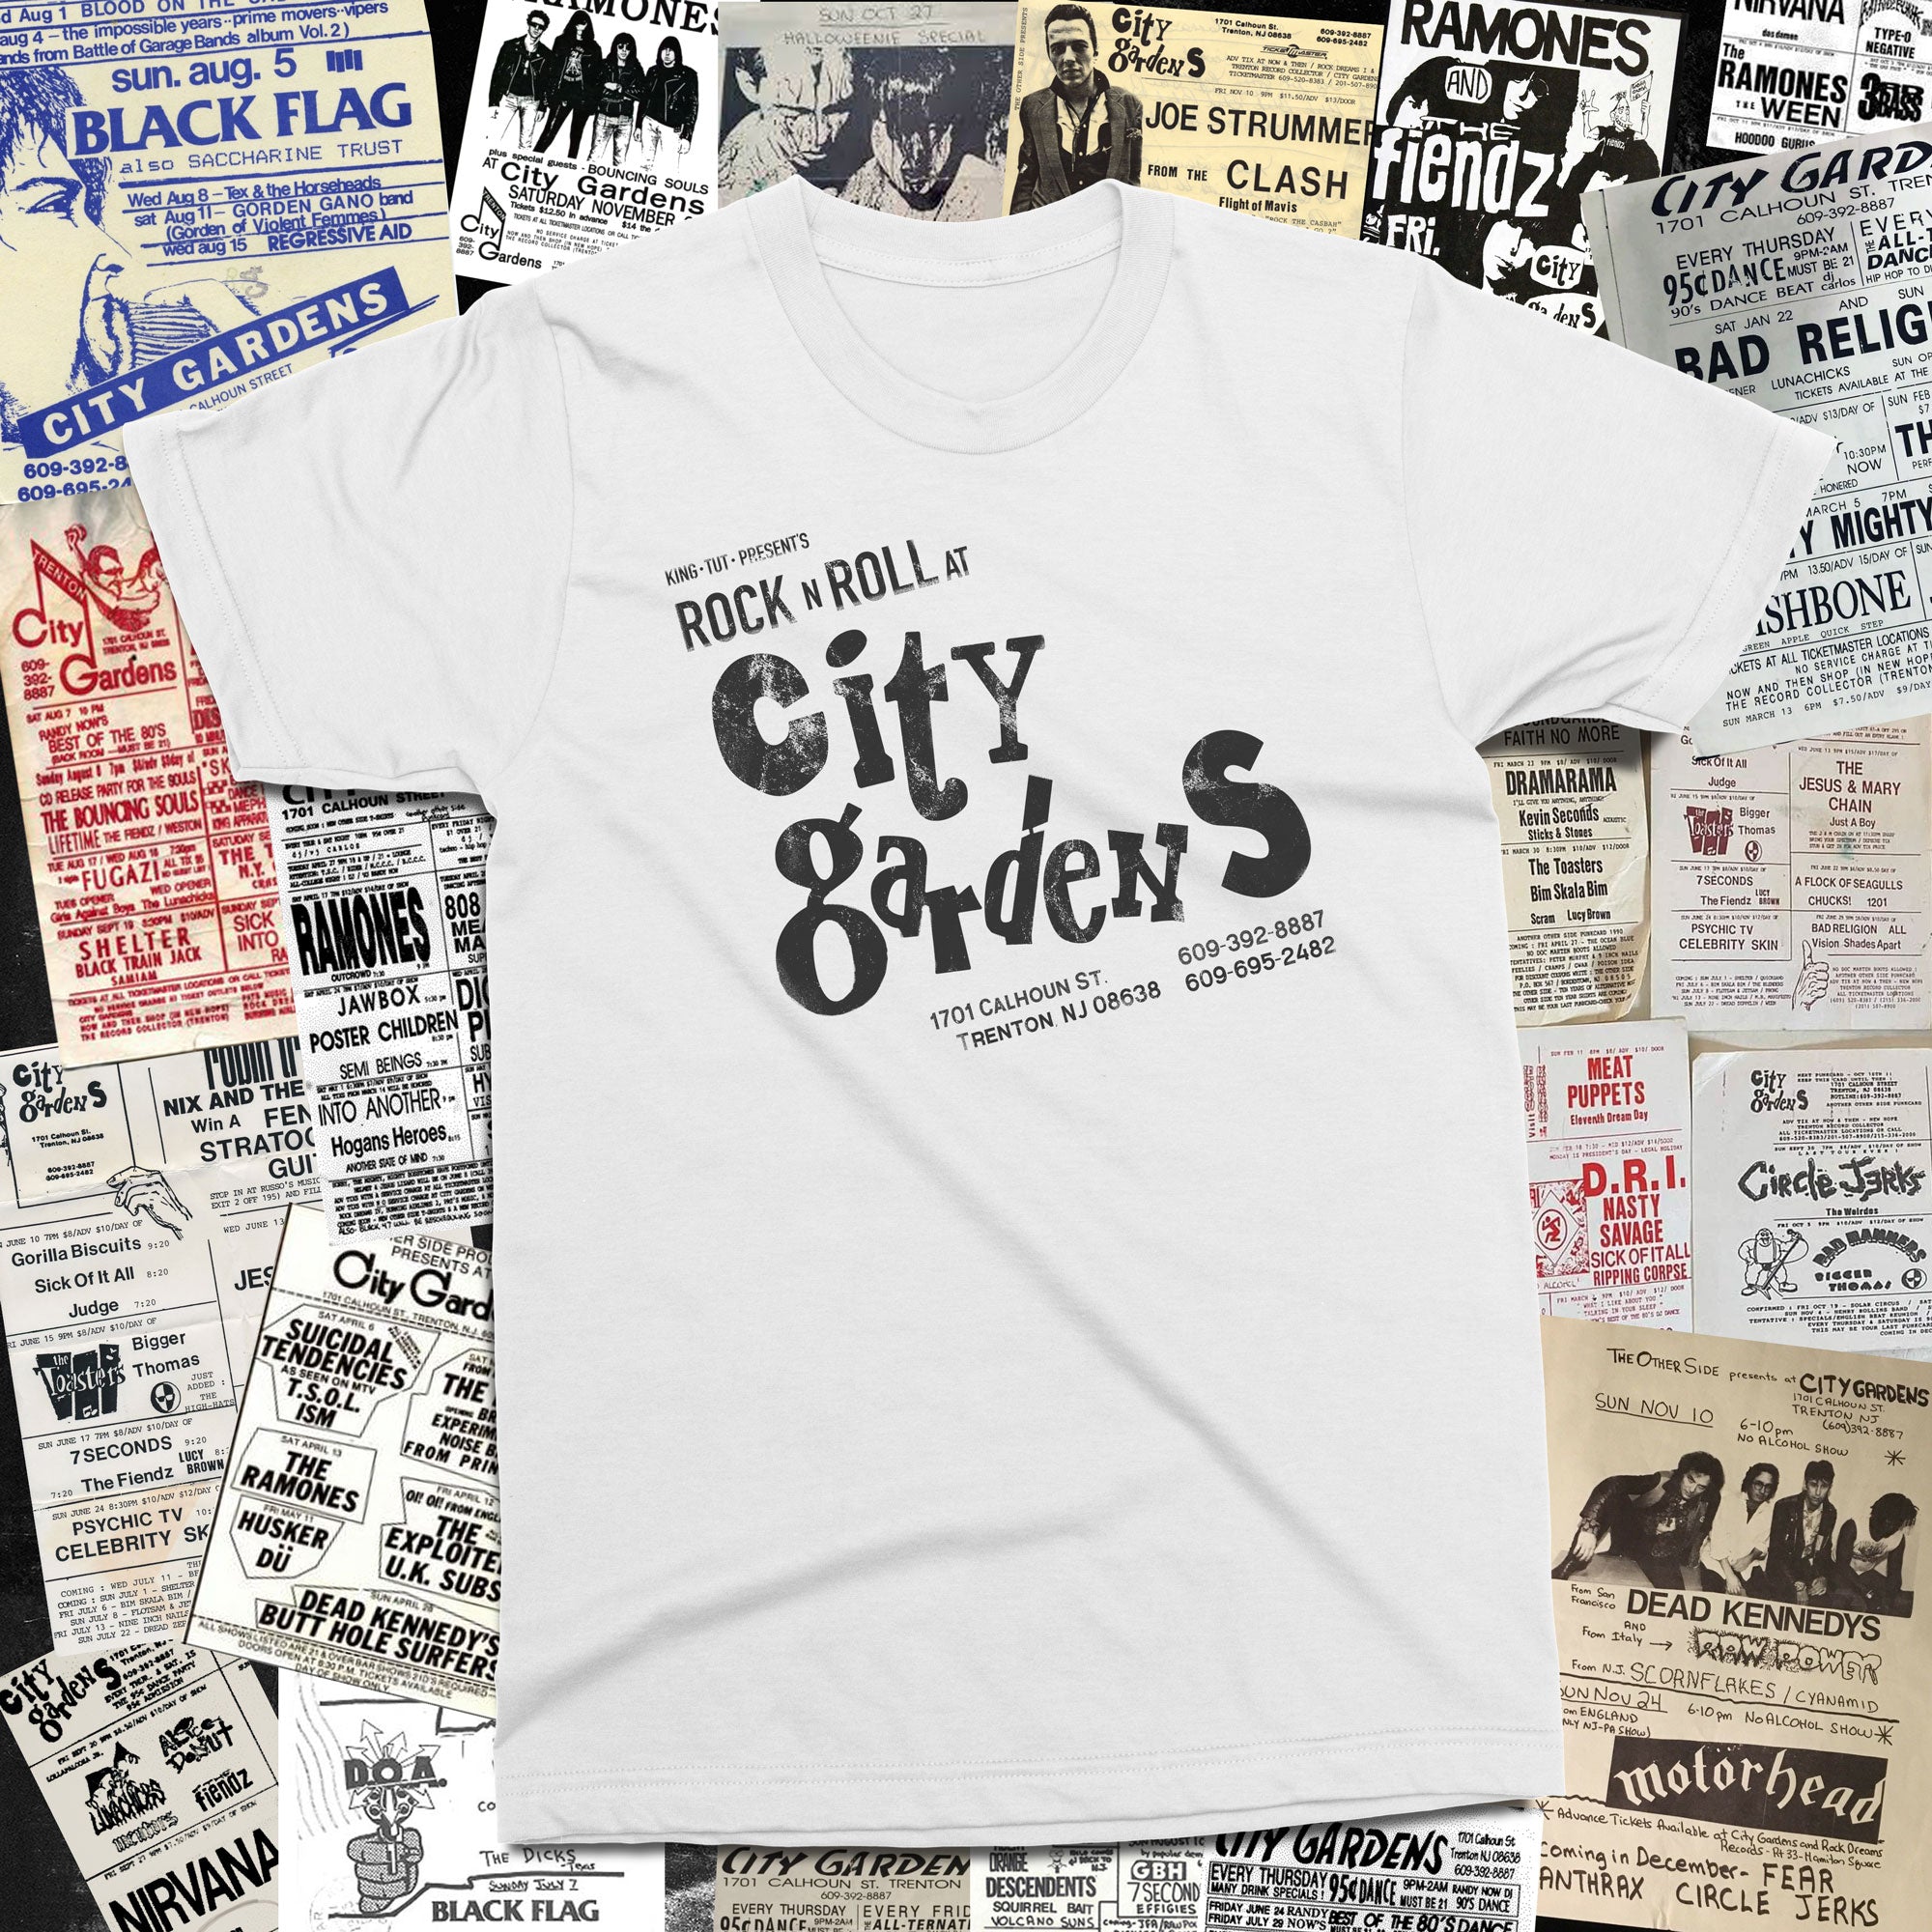 City Gardens T-shirt, Trenton, NJ